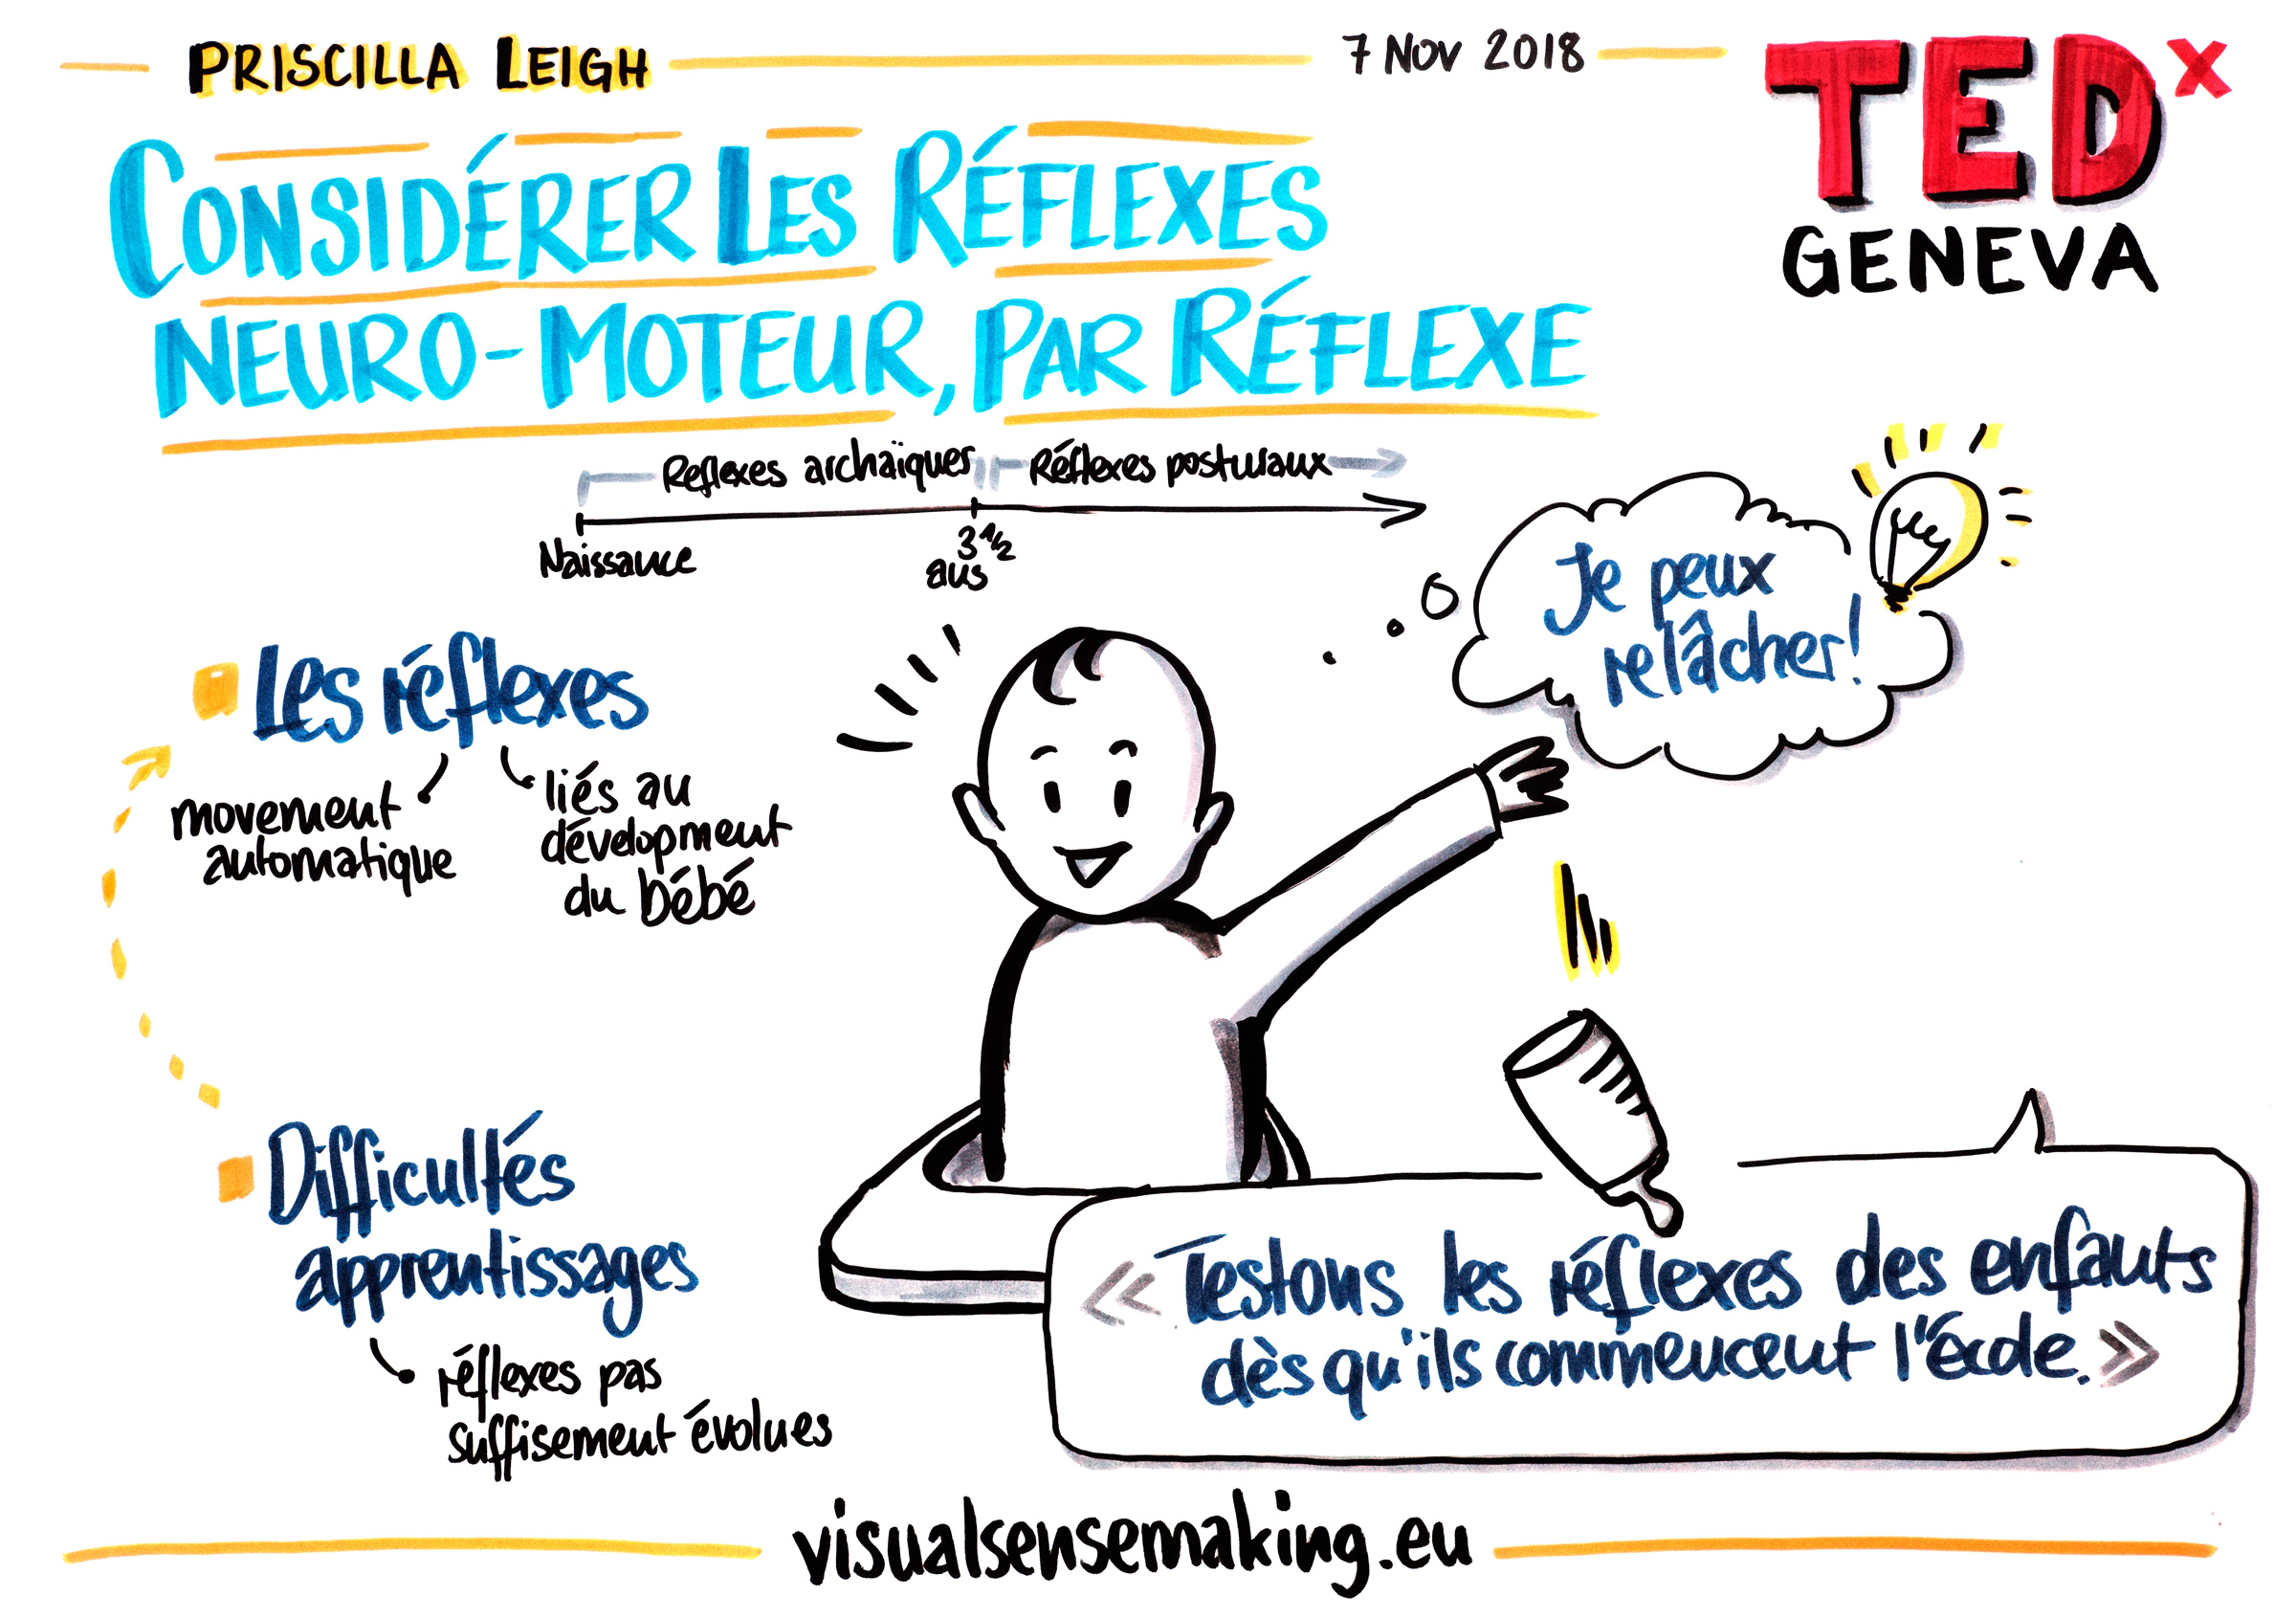 Visual summary of the talk 'Testons les réflexes neuro-moteur, par réflexe'